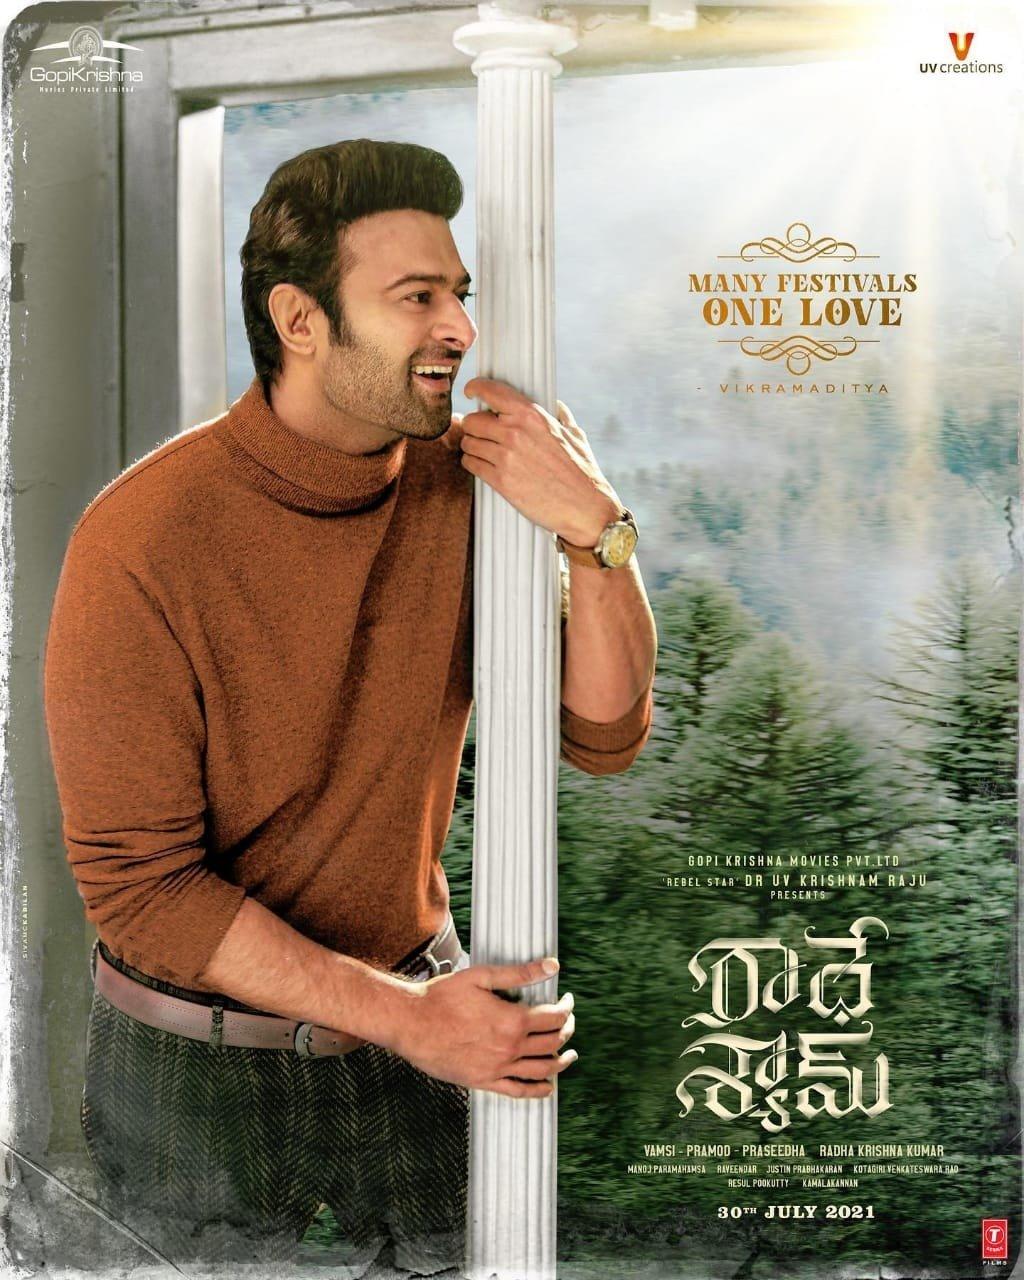 Telugu Movies Posters Released For Ugadi 2021! "Telugu Movies, Music